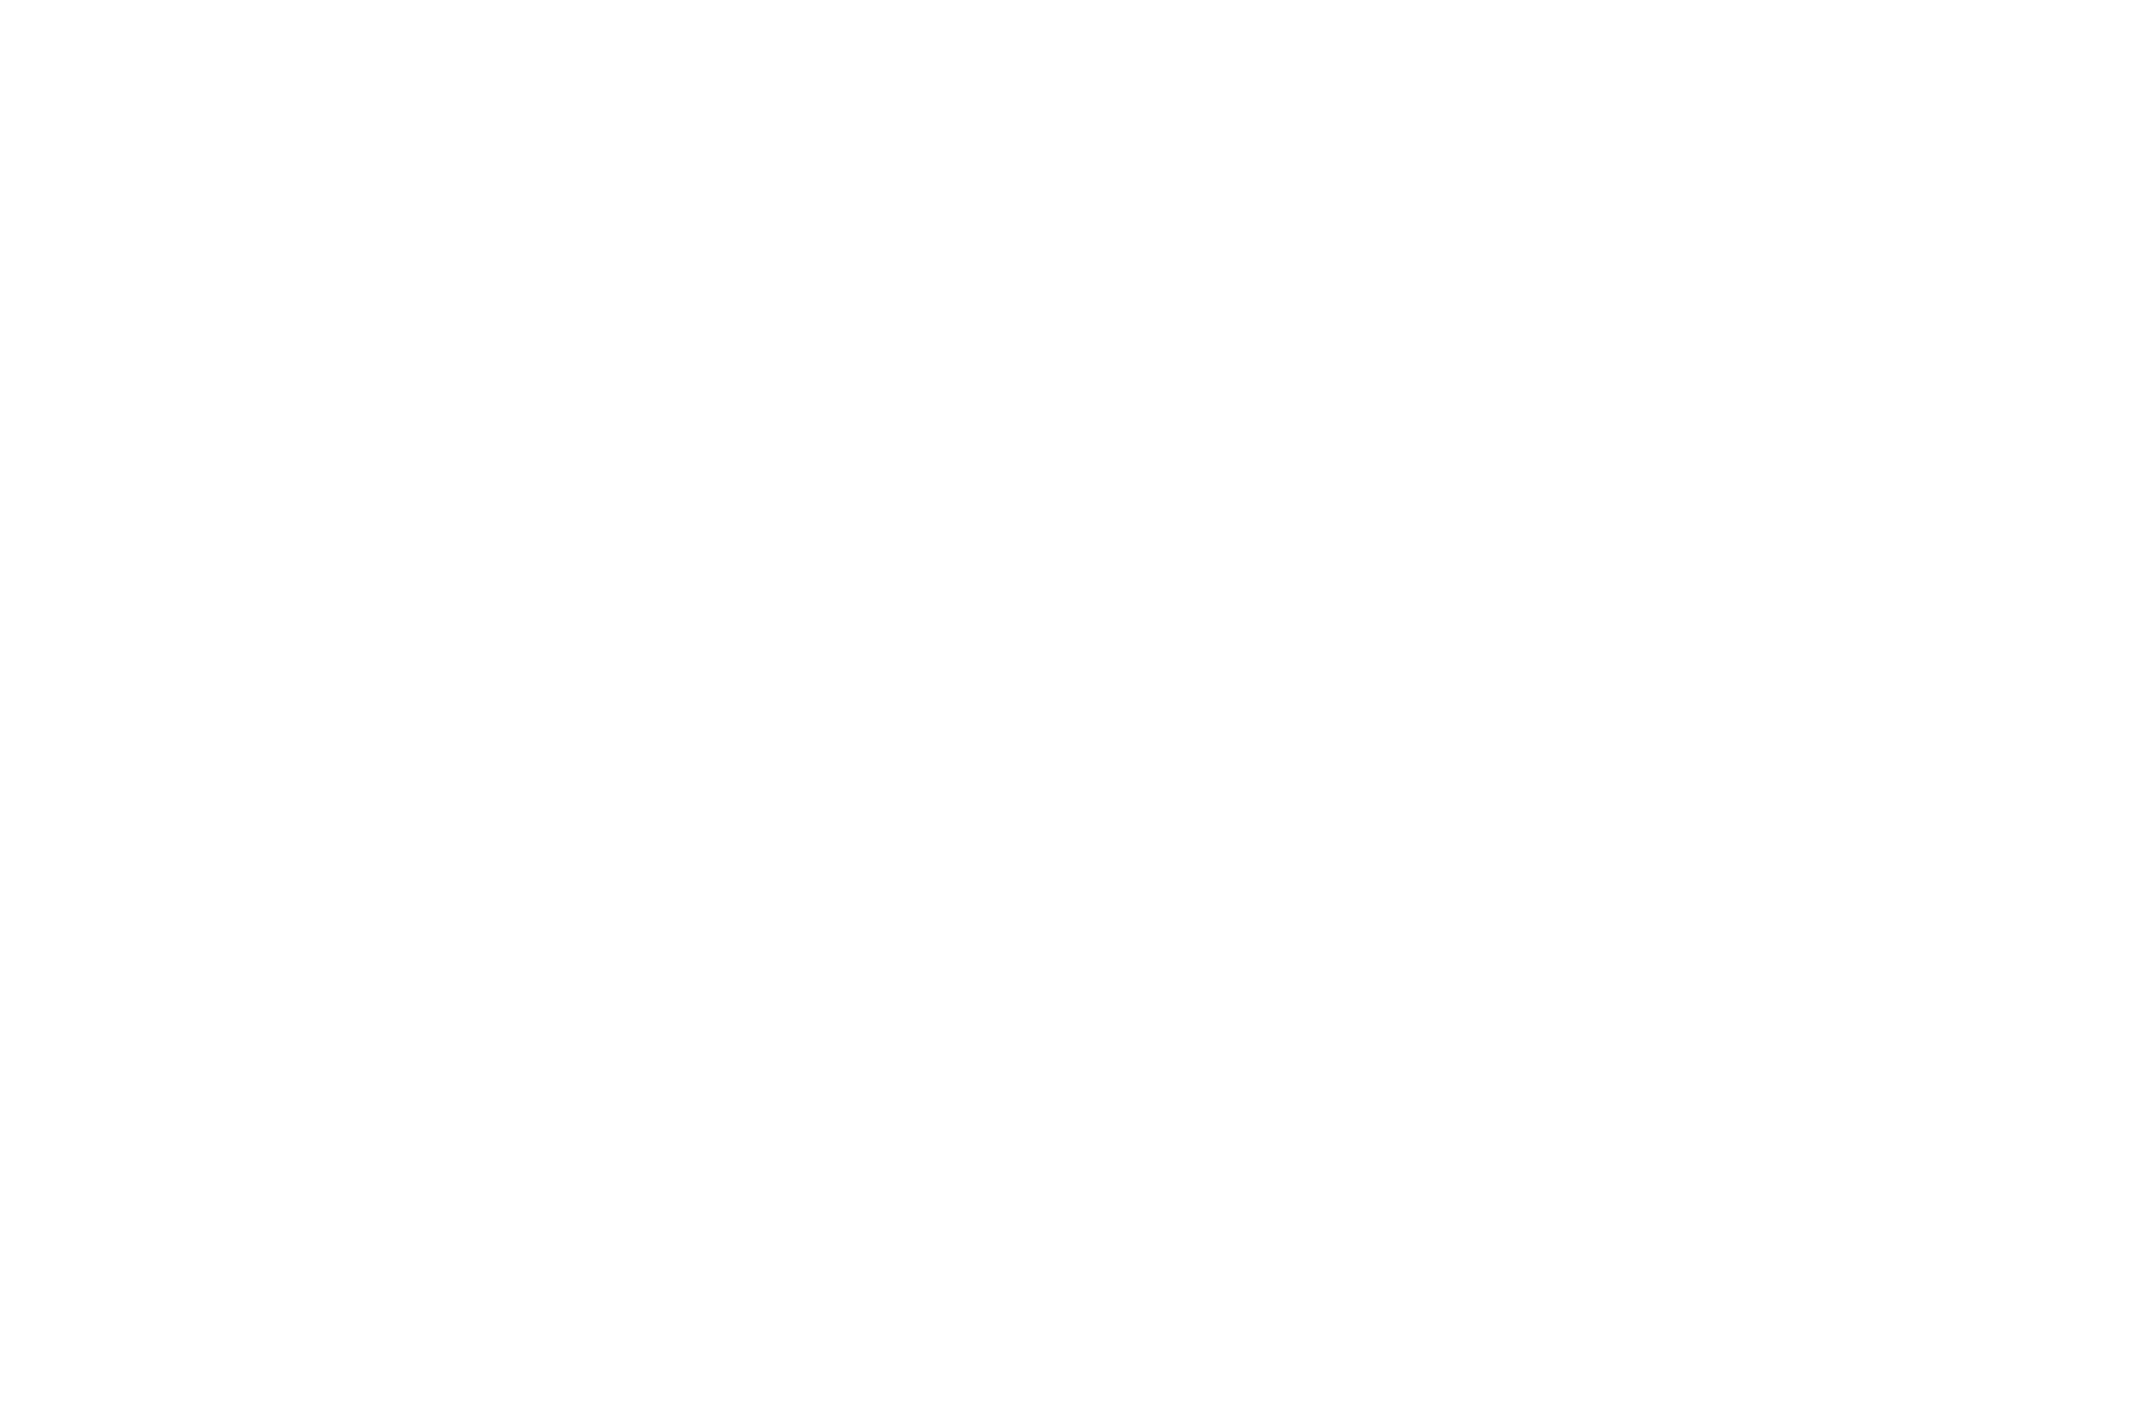 Wild Bandito banner title 1